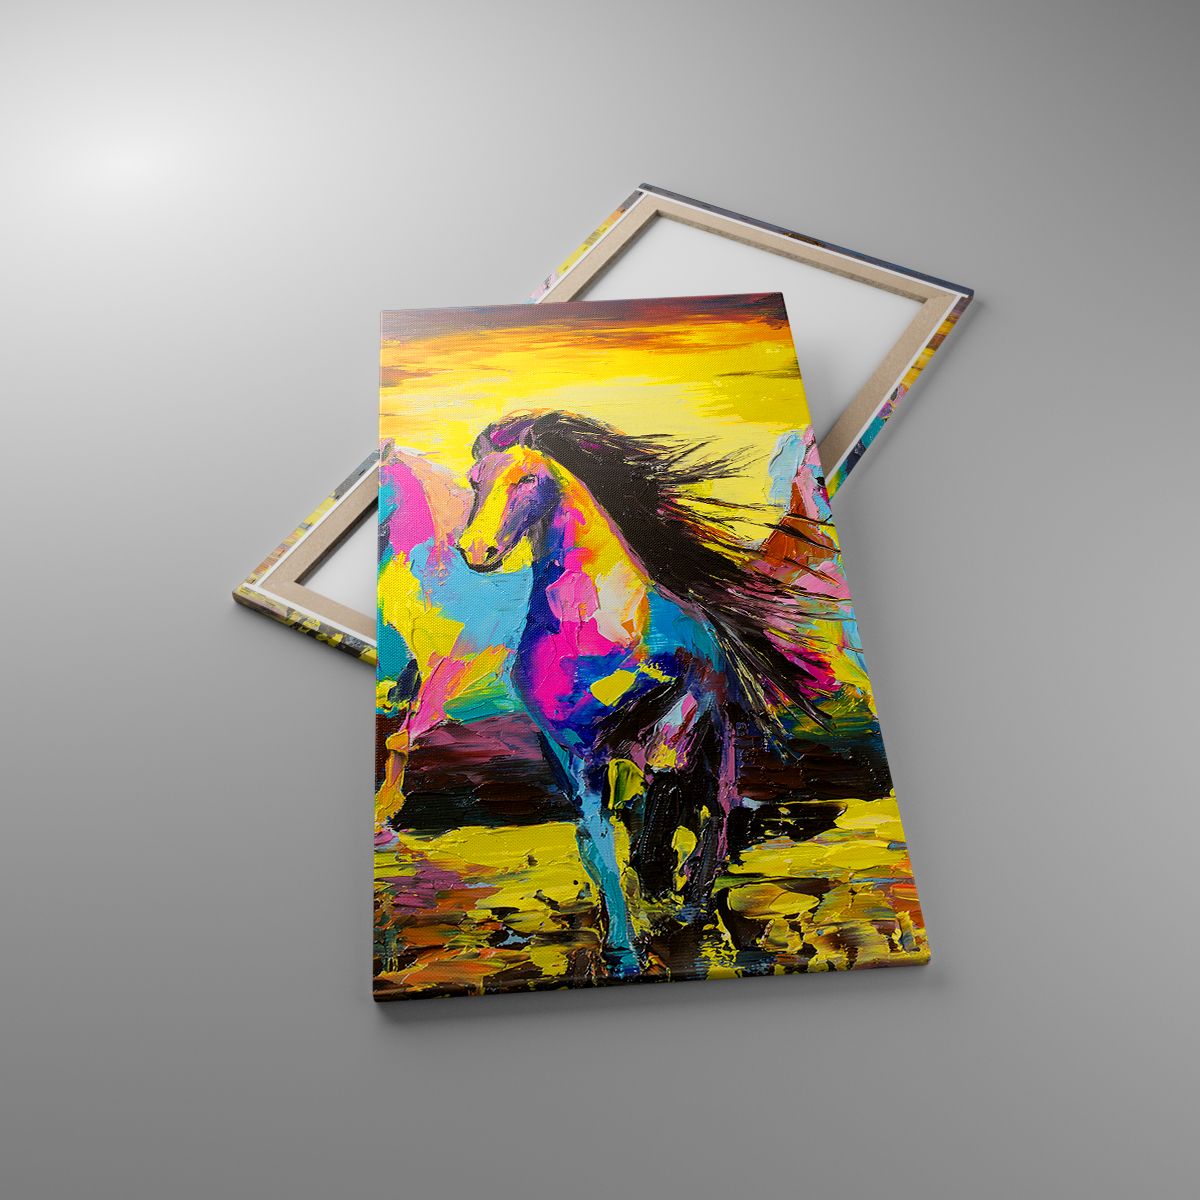 Leinwandbild Tiere, Leinwandbild Die Pferde, Leinwandbild Freiheit, Leinwandbild Kunst, Leinwandbild Abstraktion